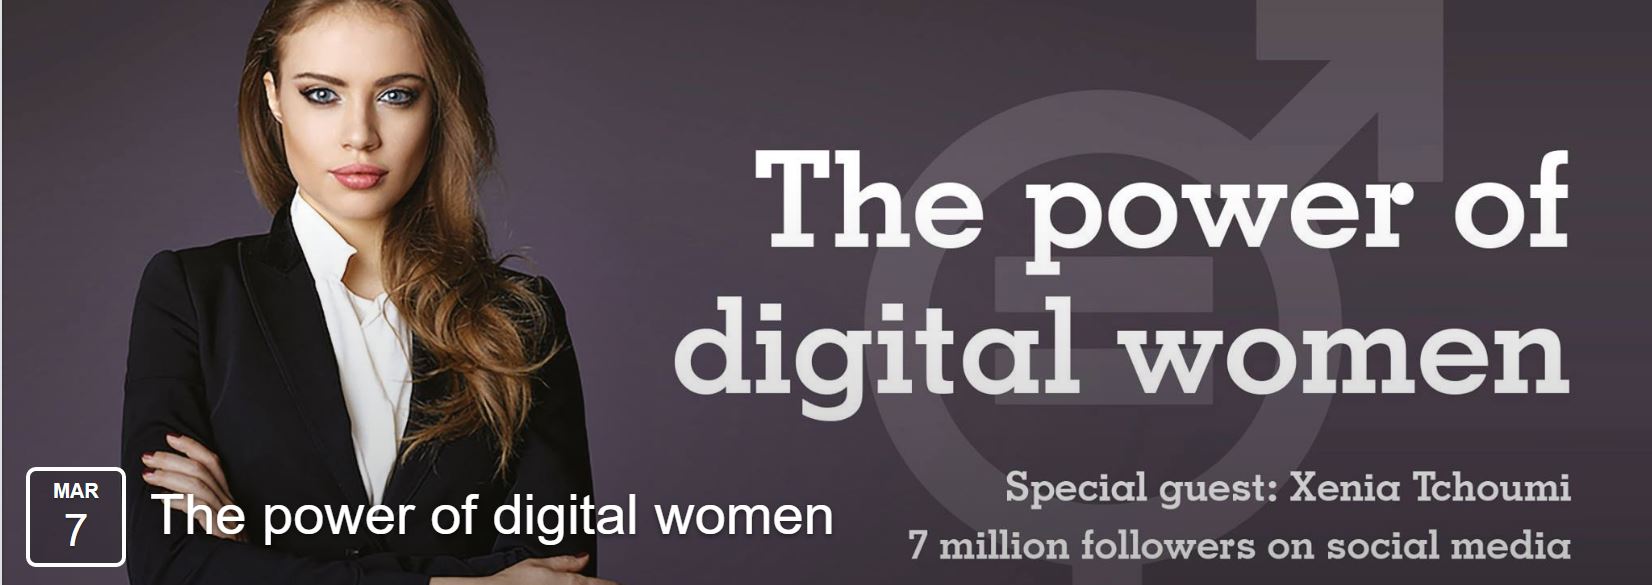 Xenia Tchoumi women and digital talk at the UN